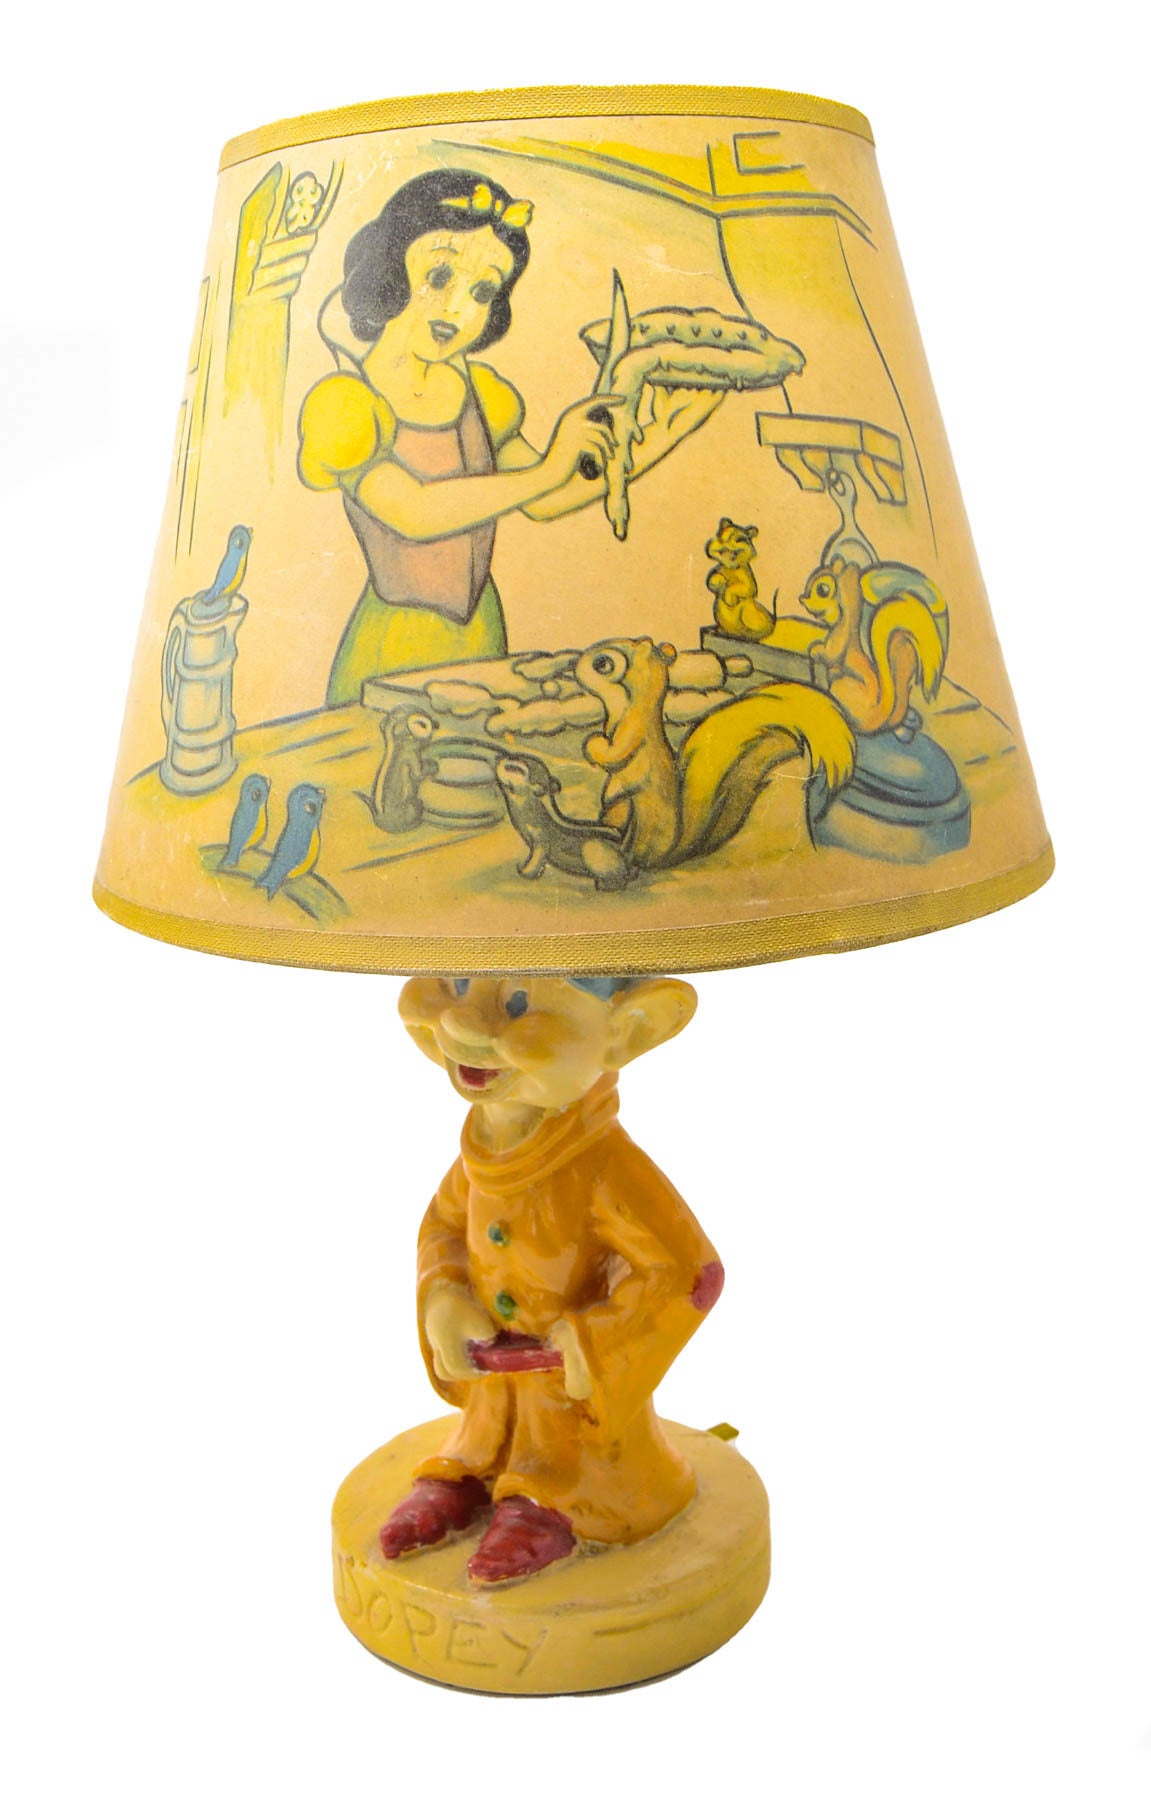 1938 Dopey Lamp